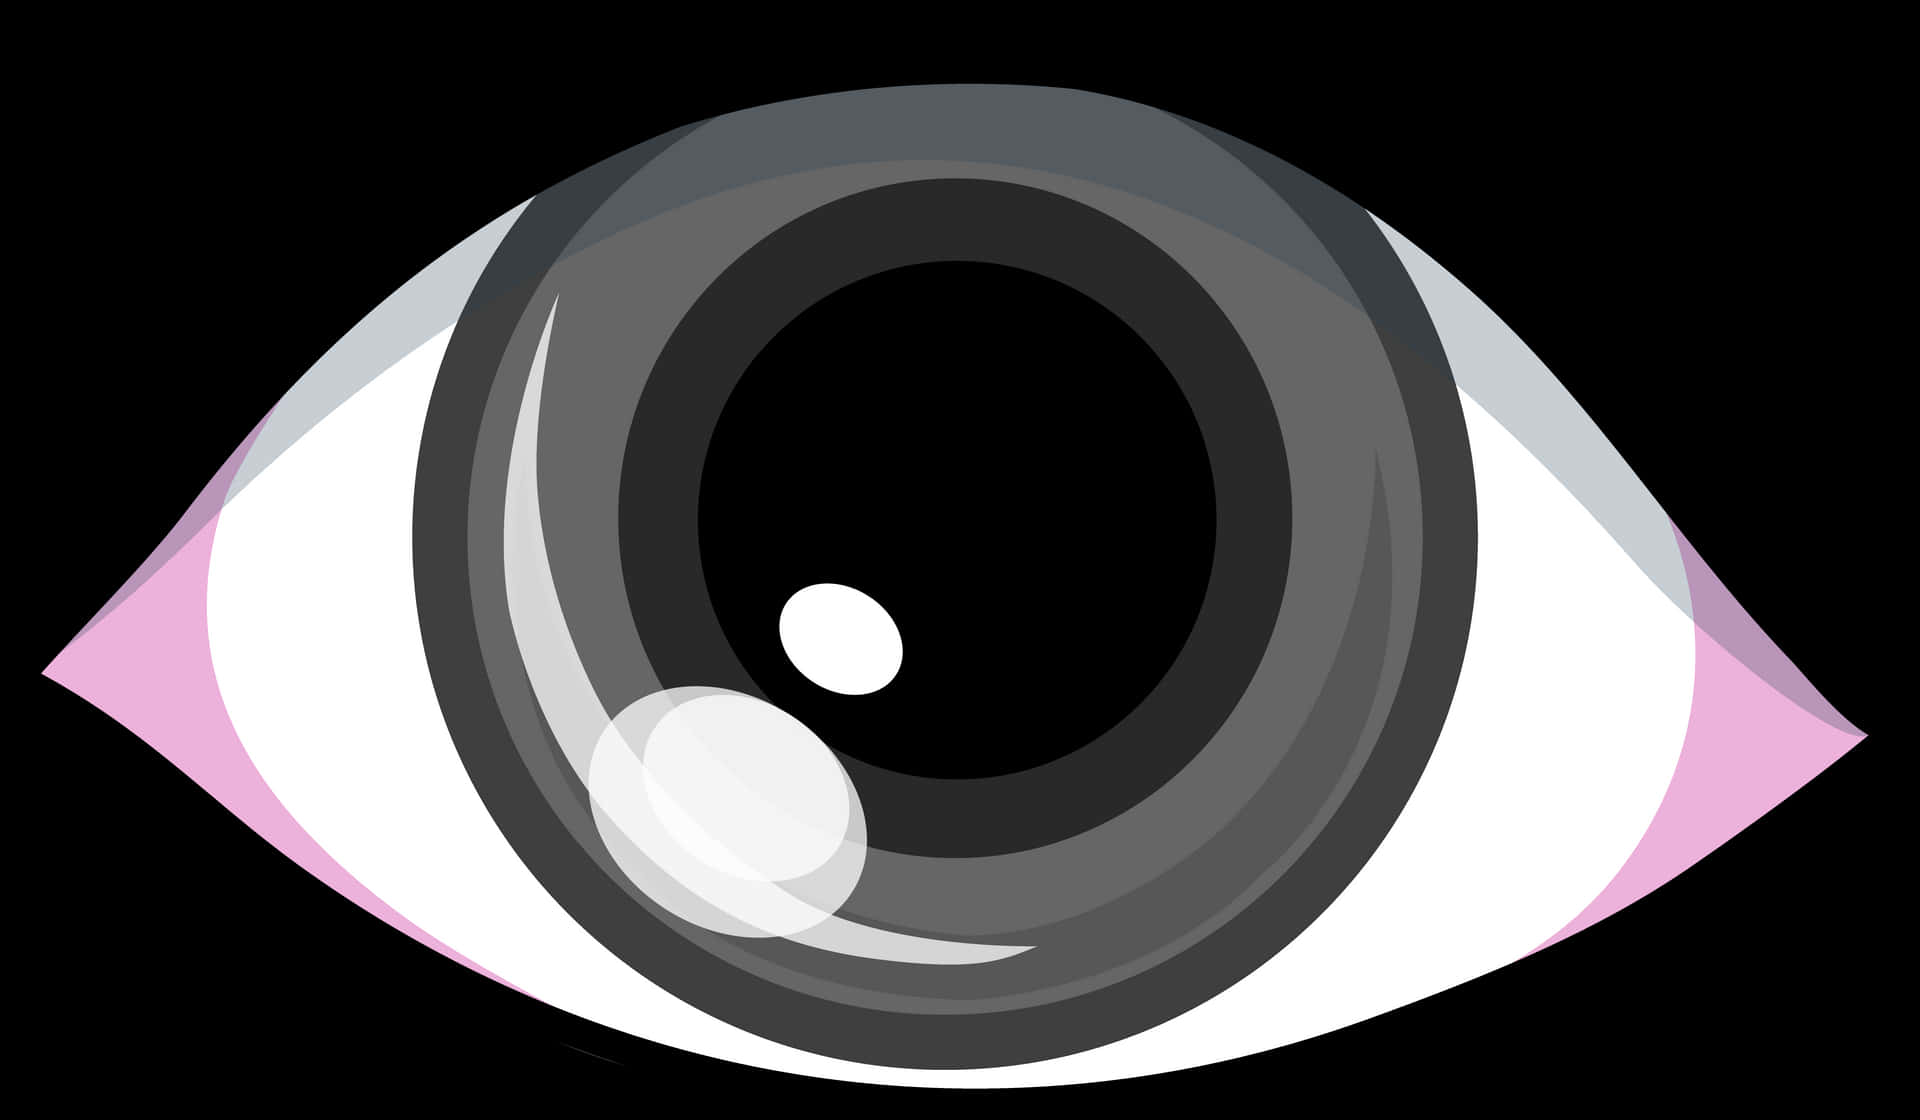 Abstract Eye Illustration.jpg PNG